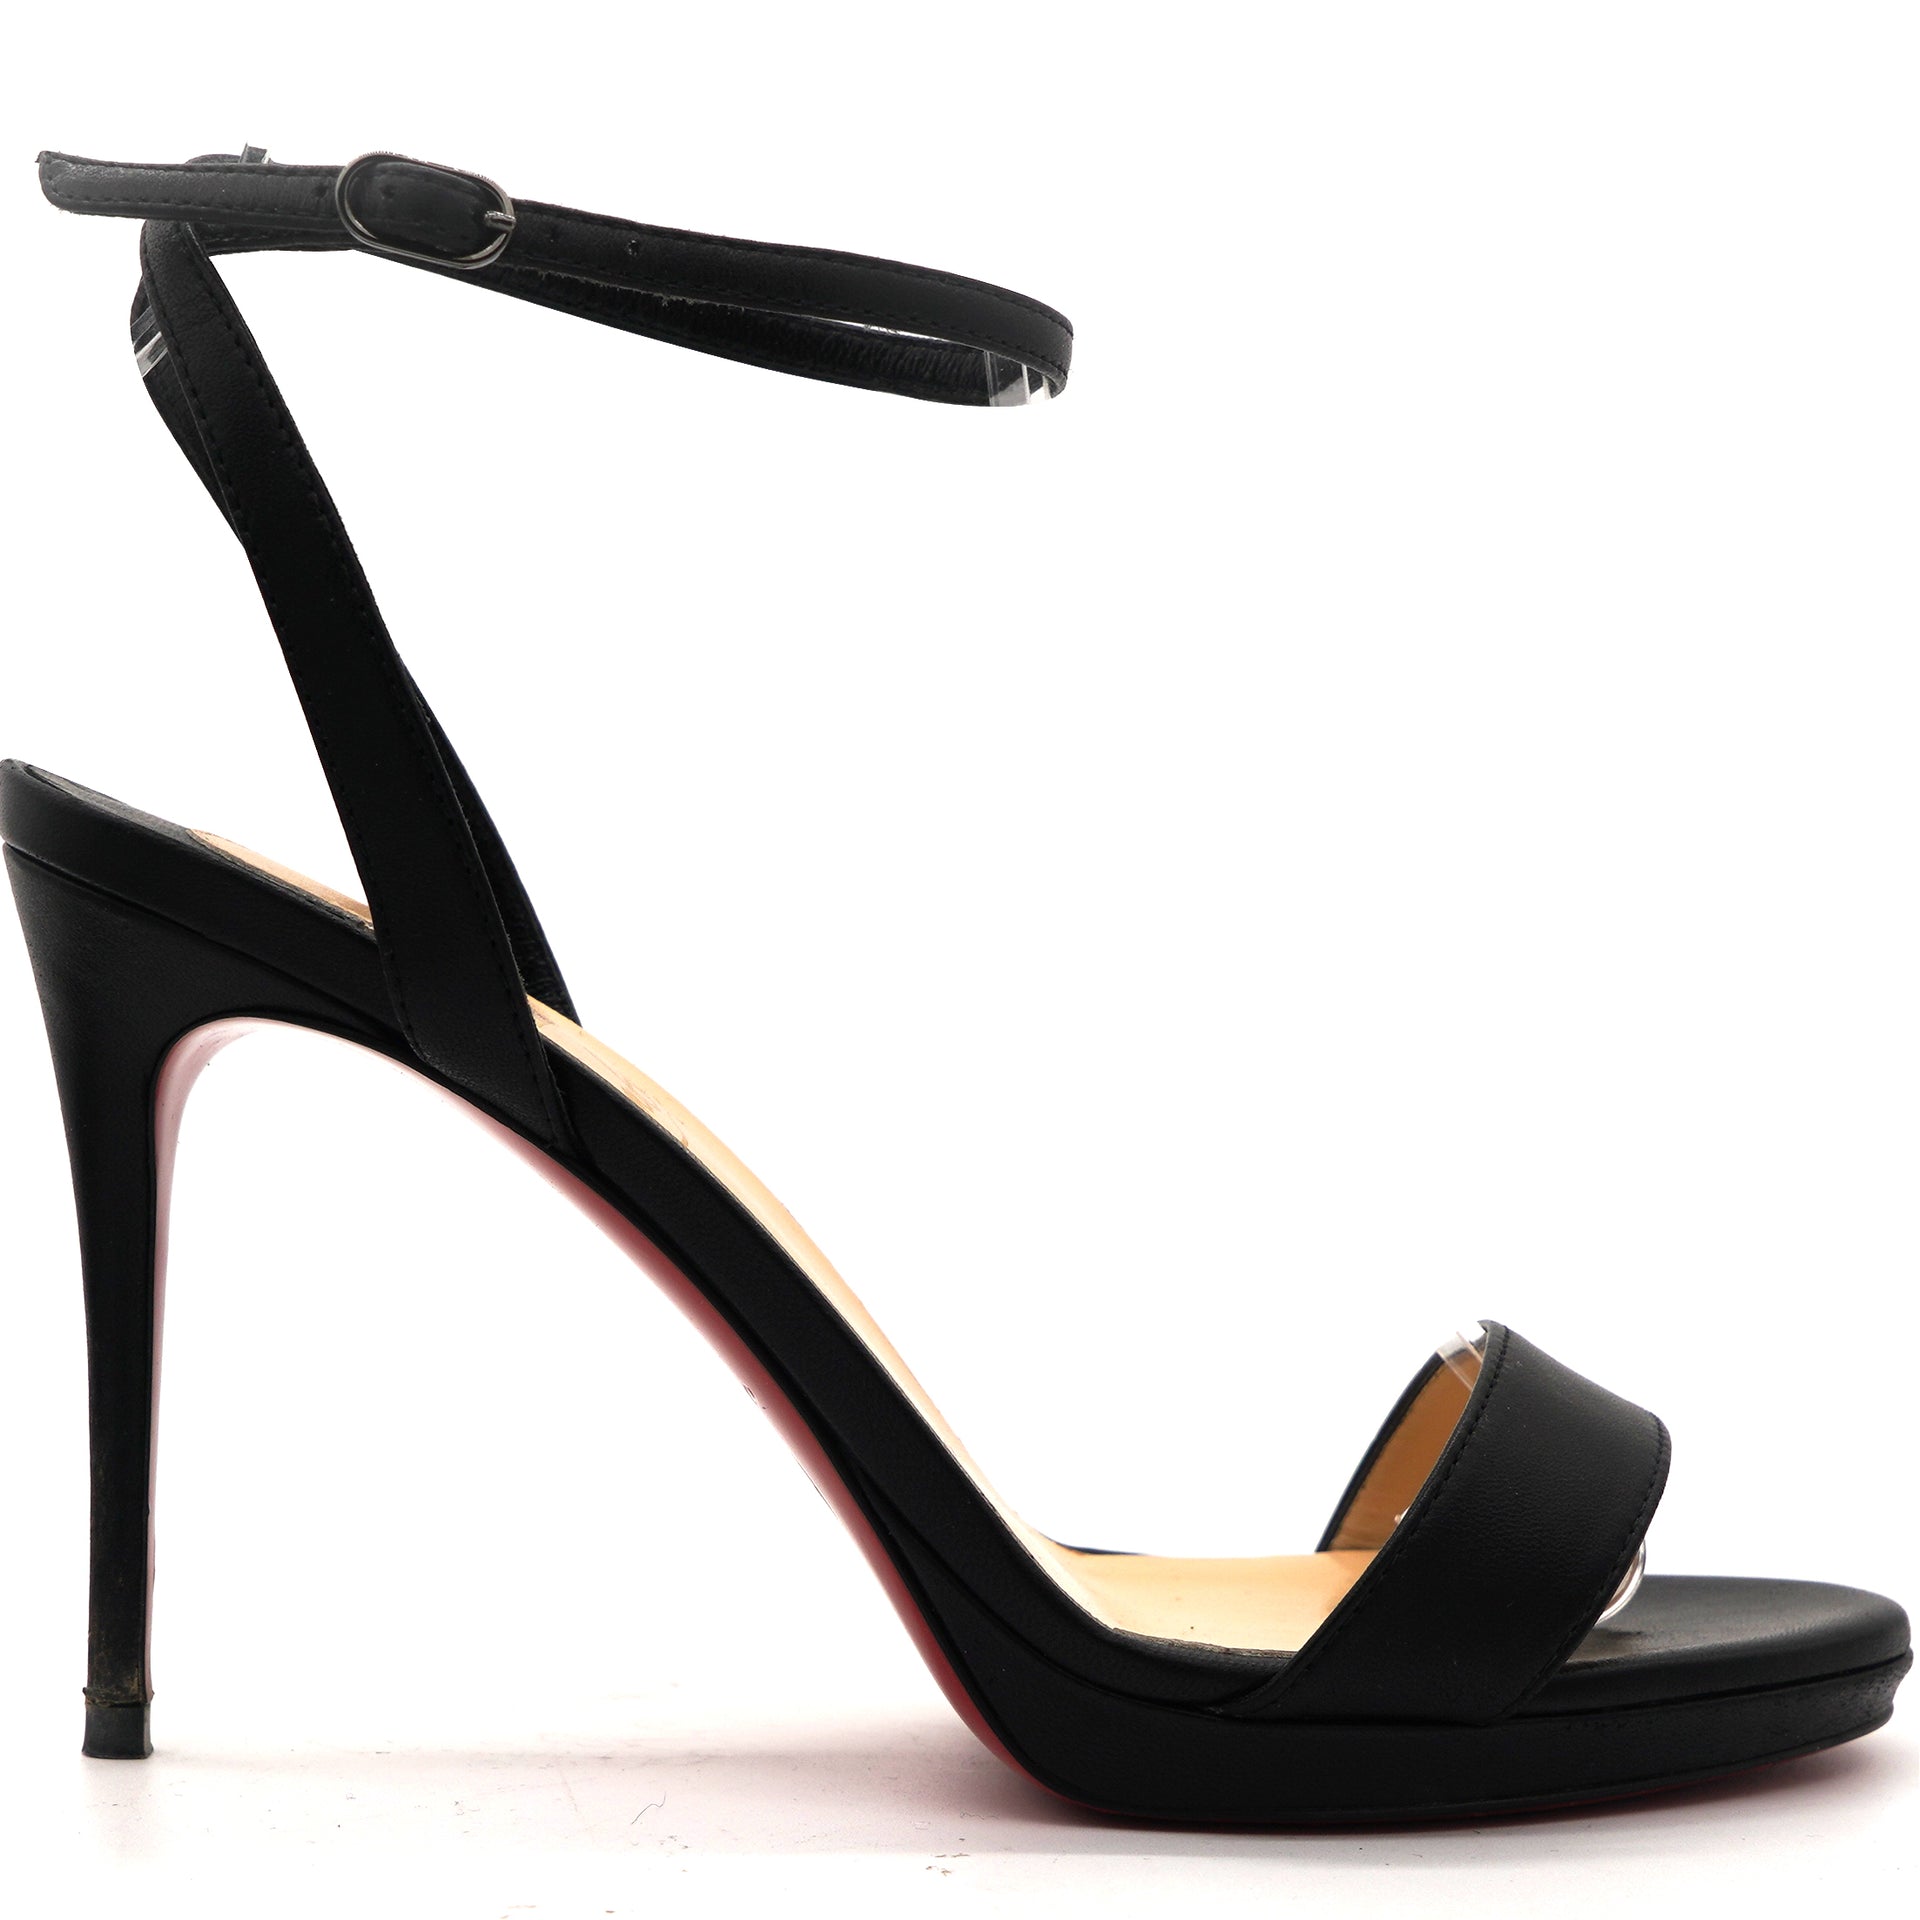 Elegant Christian Louboutin Ankle-Strap Pumps